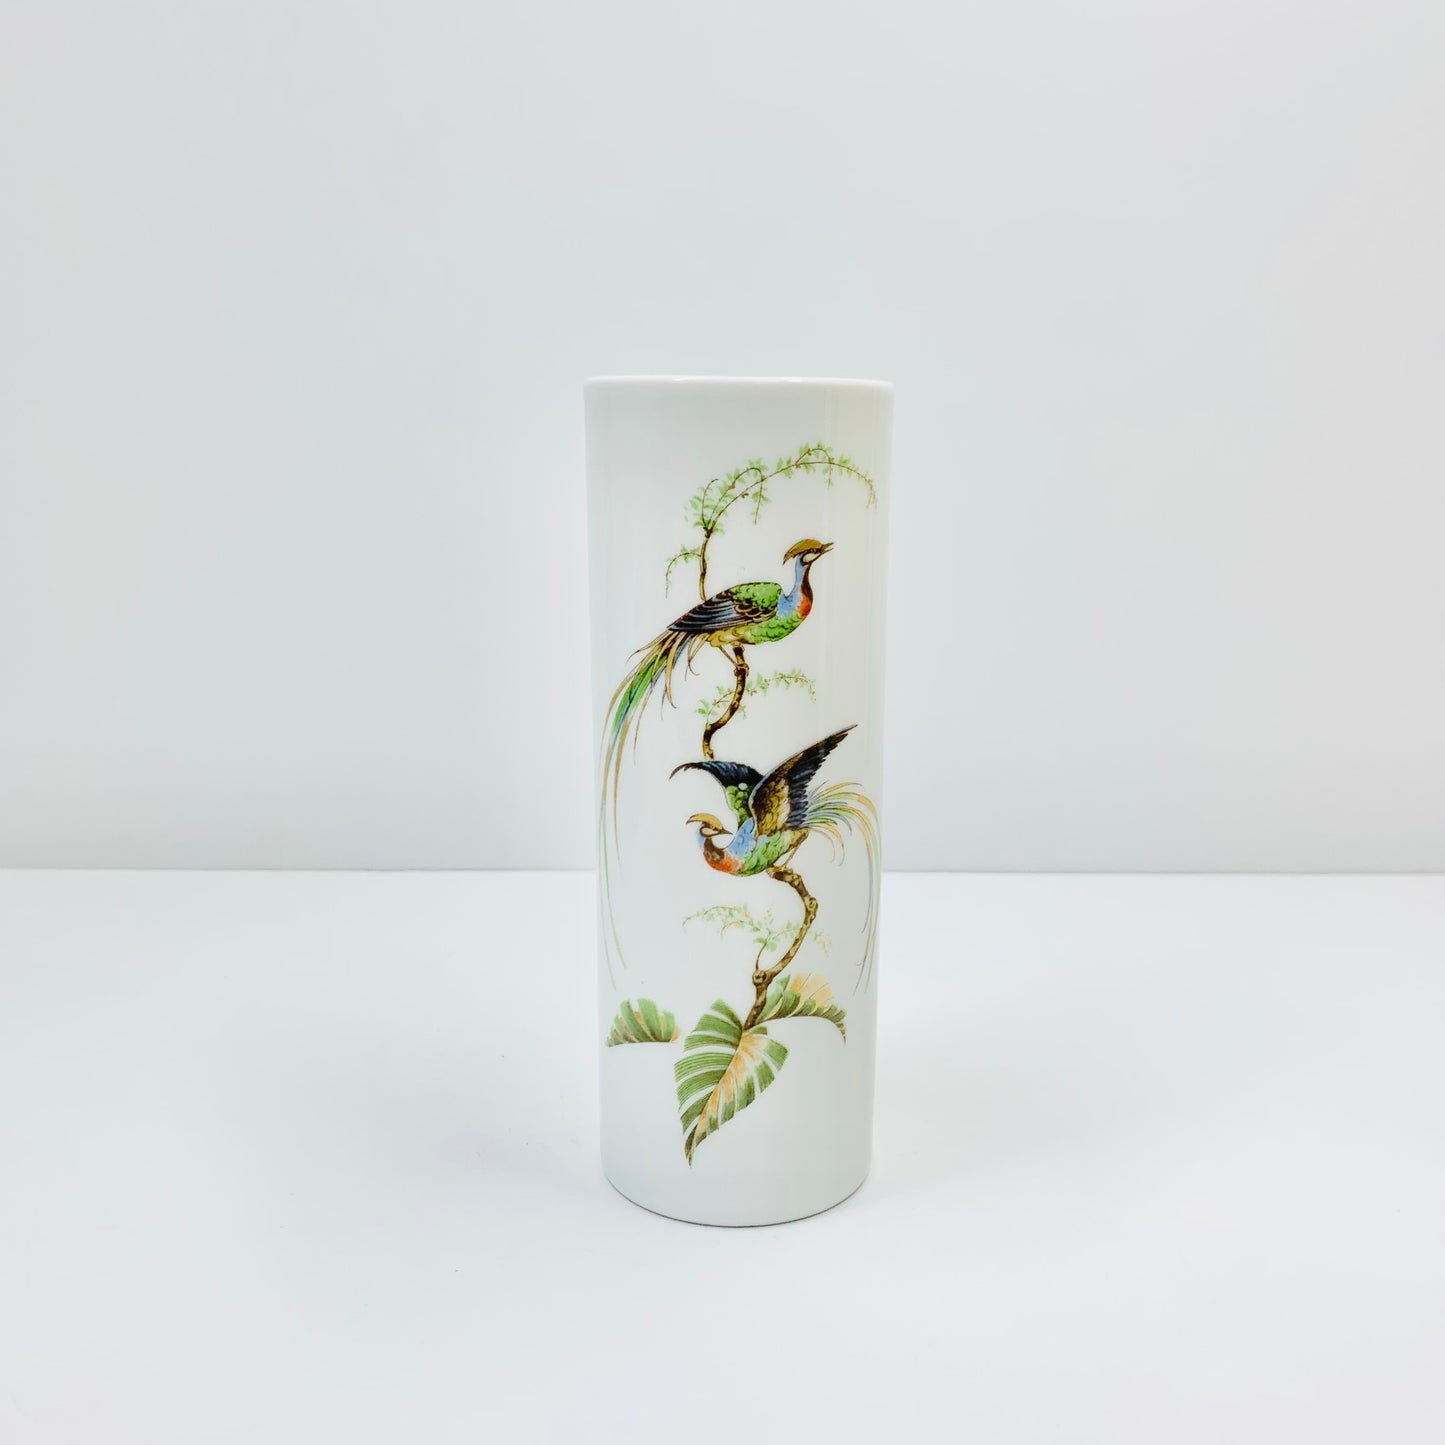 Vintage German white porcelain posy vase with birds motif